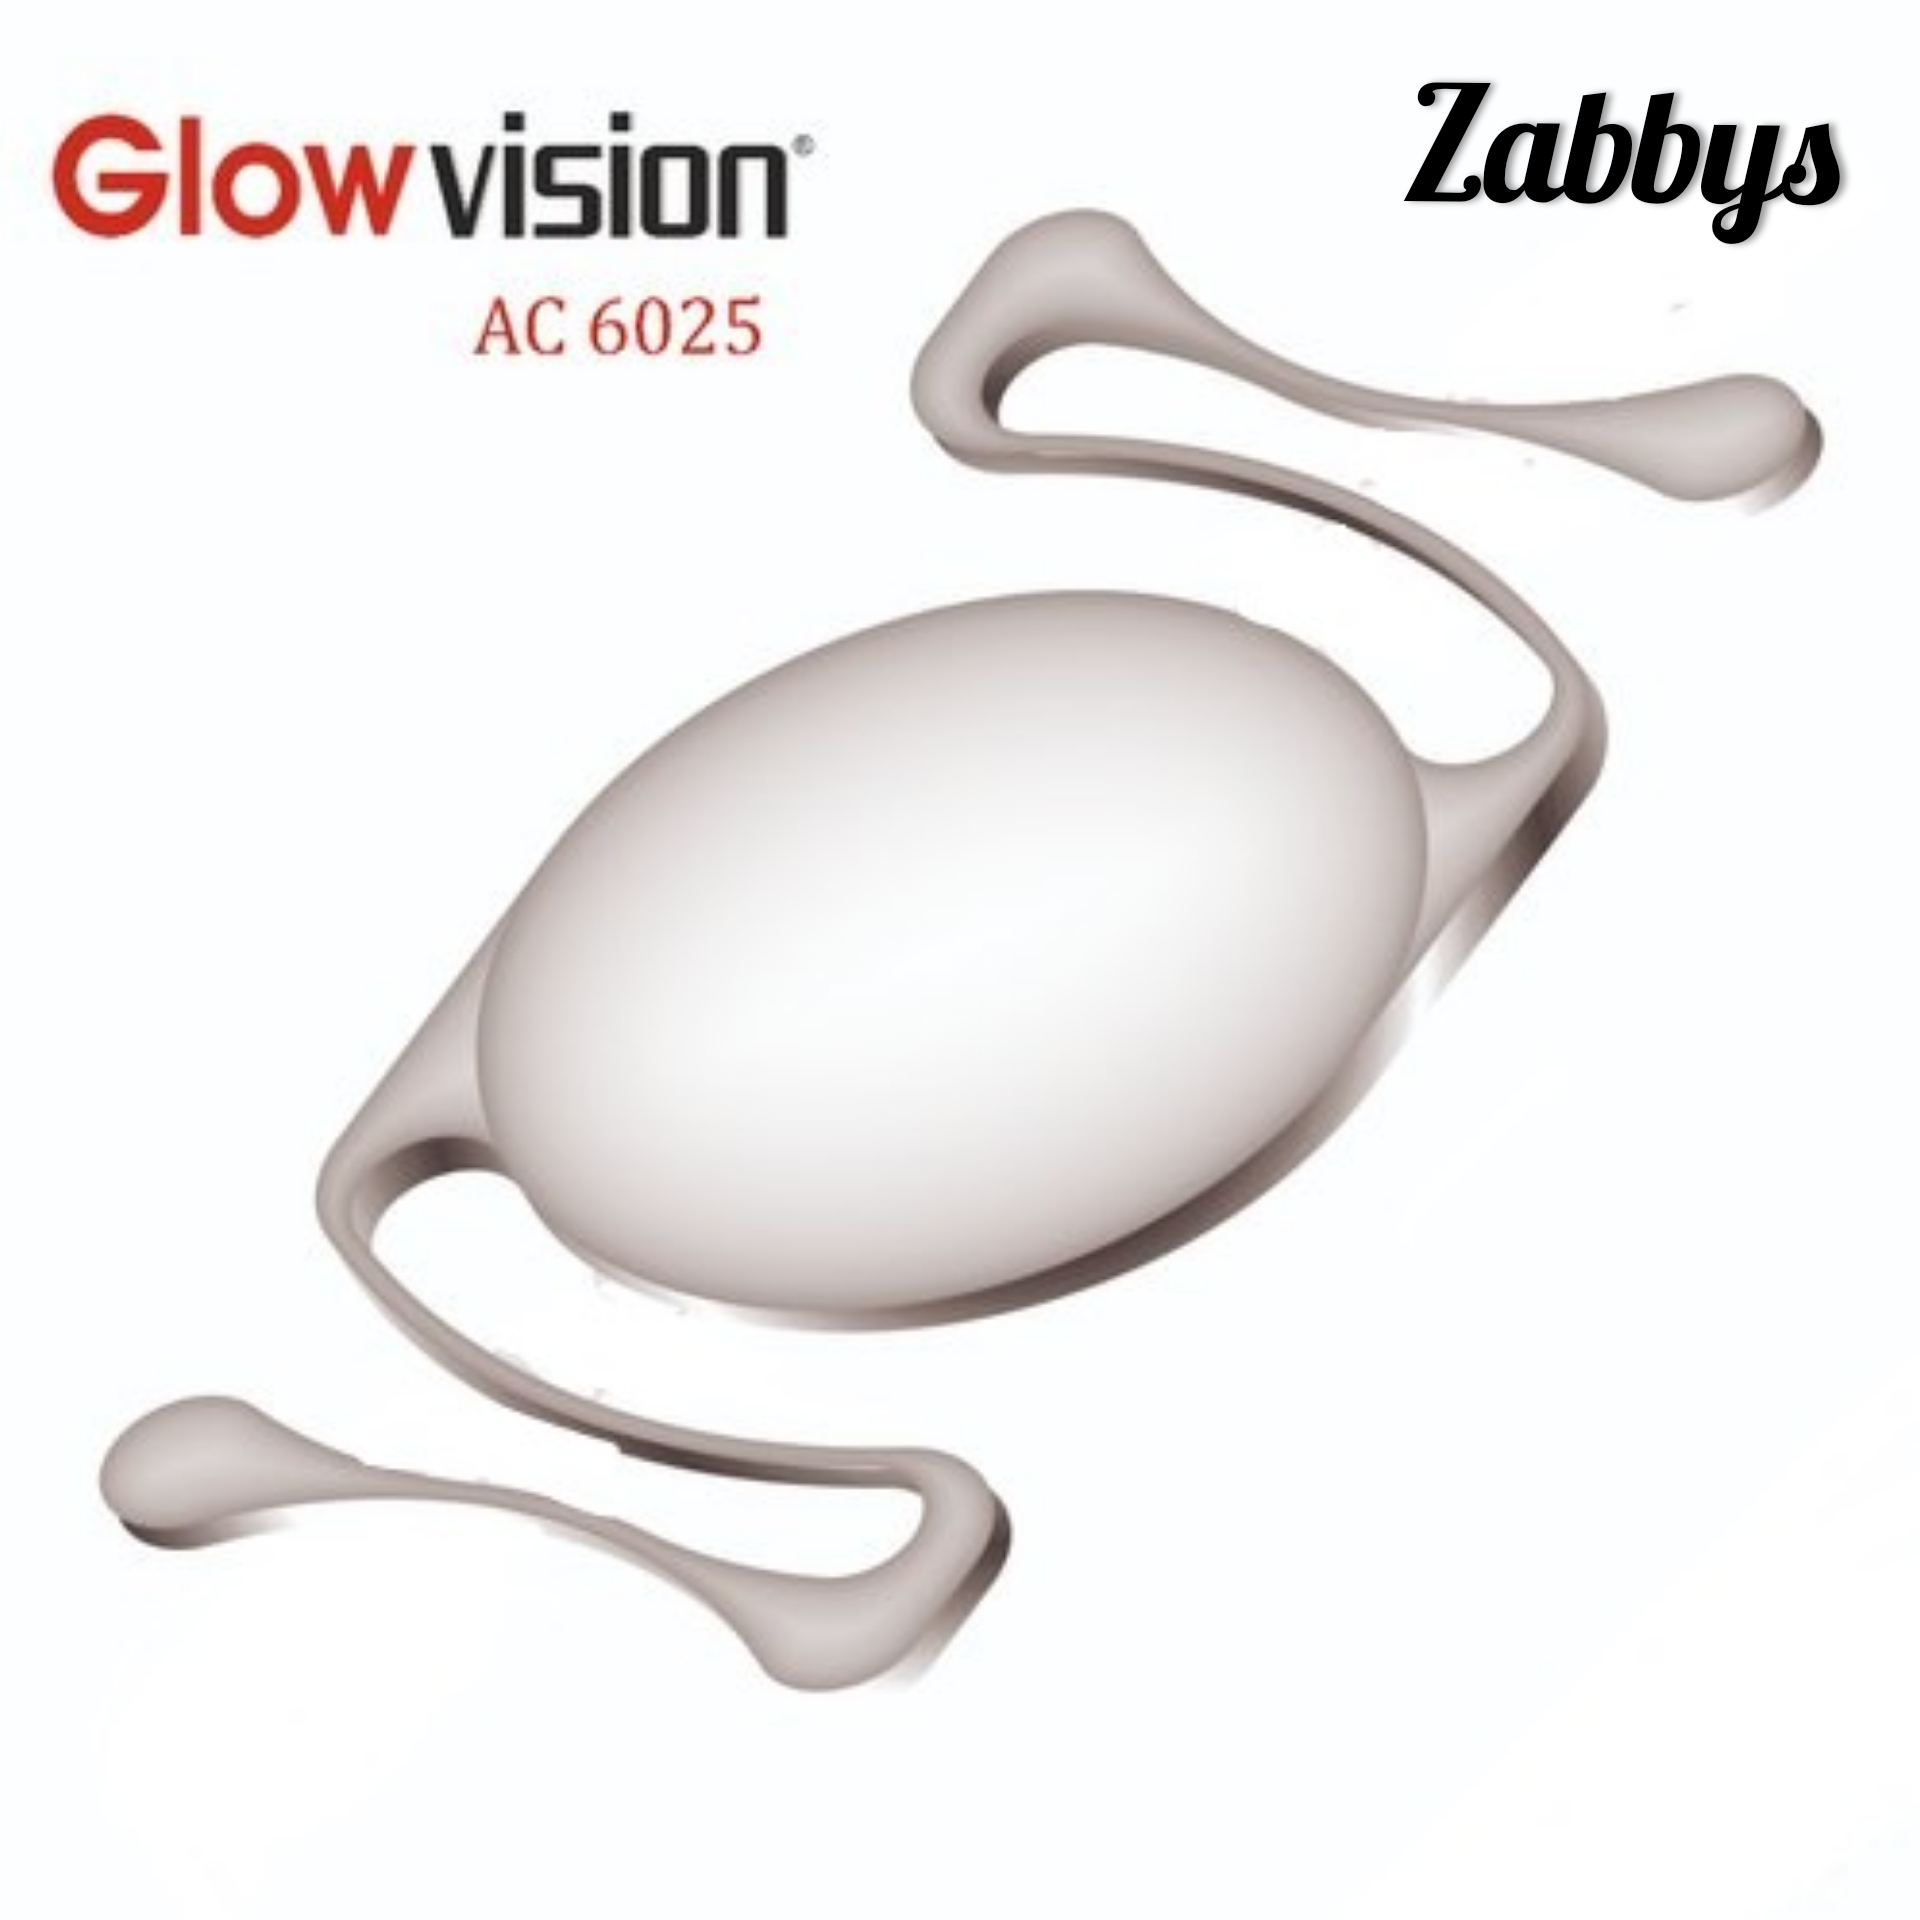 Zabbys Glowvision